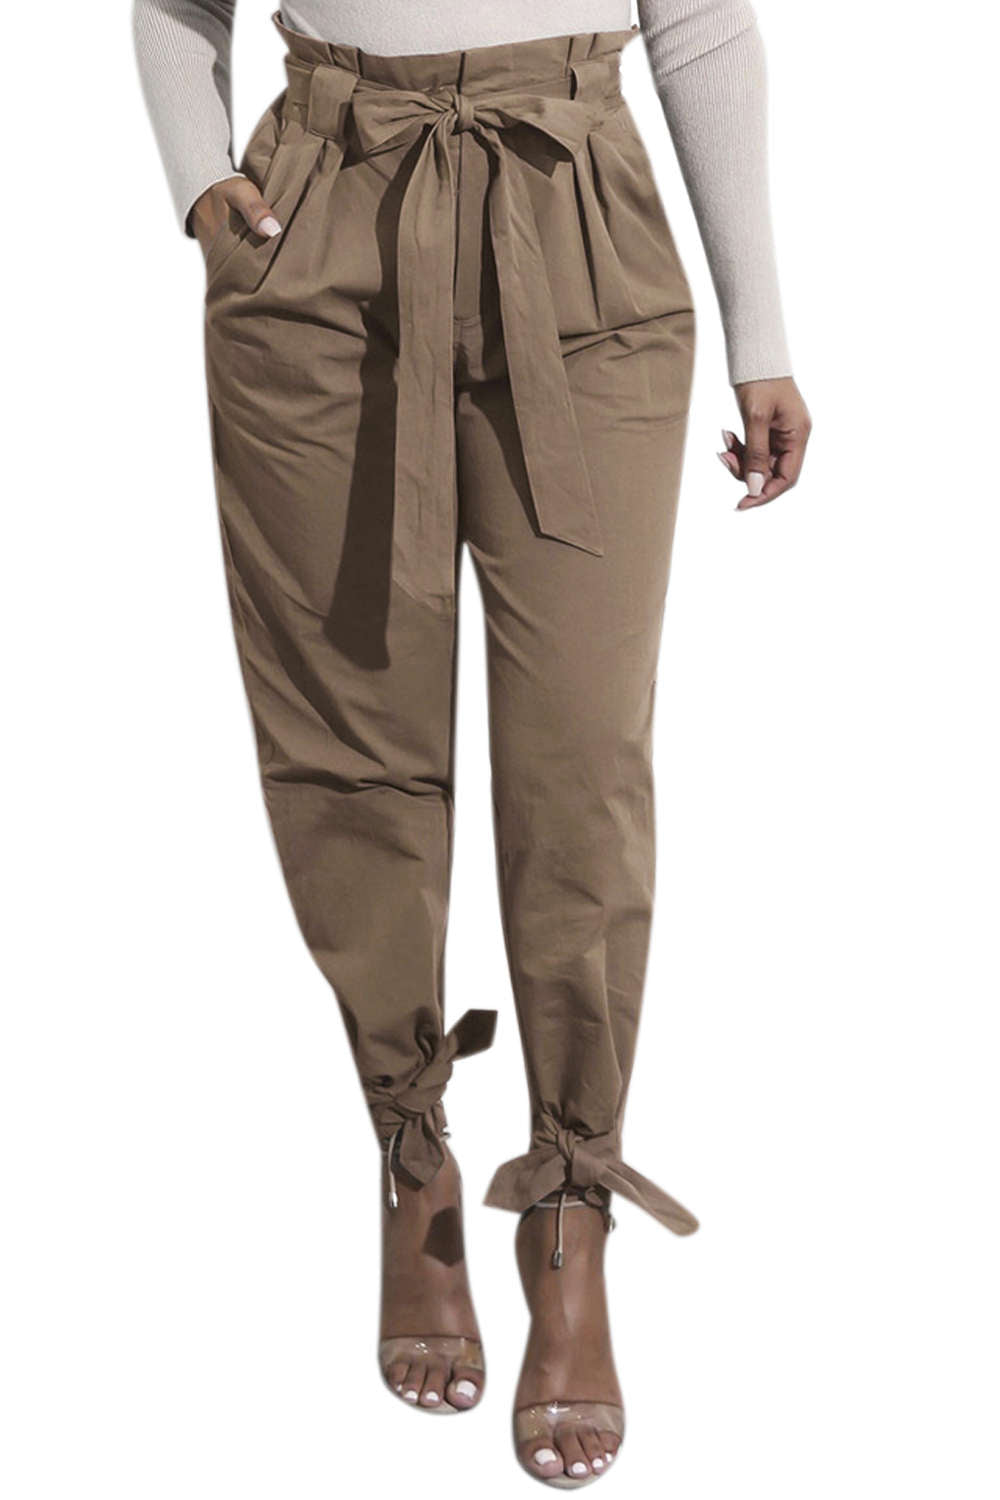 Iyasson Women's Slim Straight Leg Stretch Casual Pants with Pockets